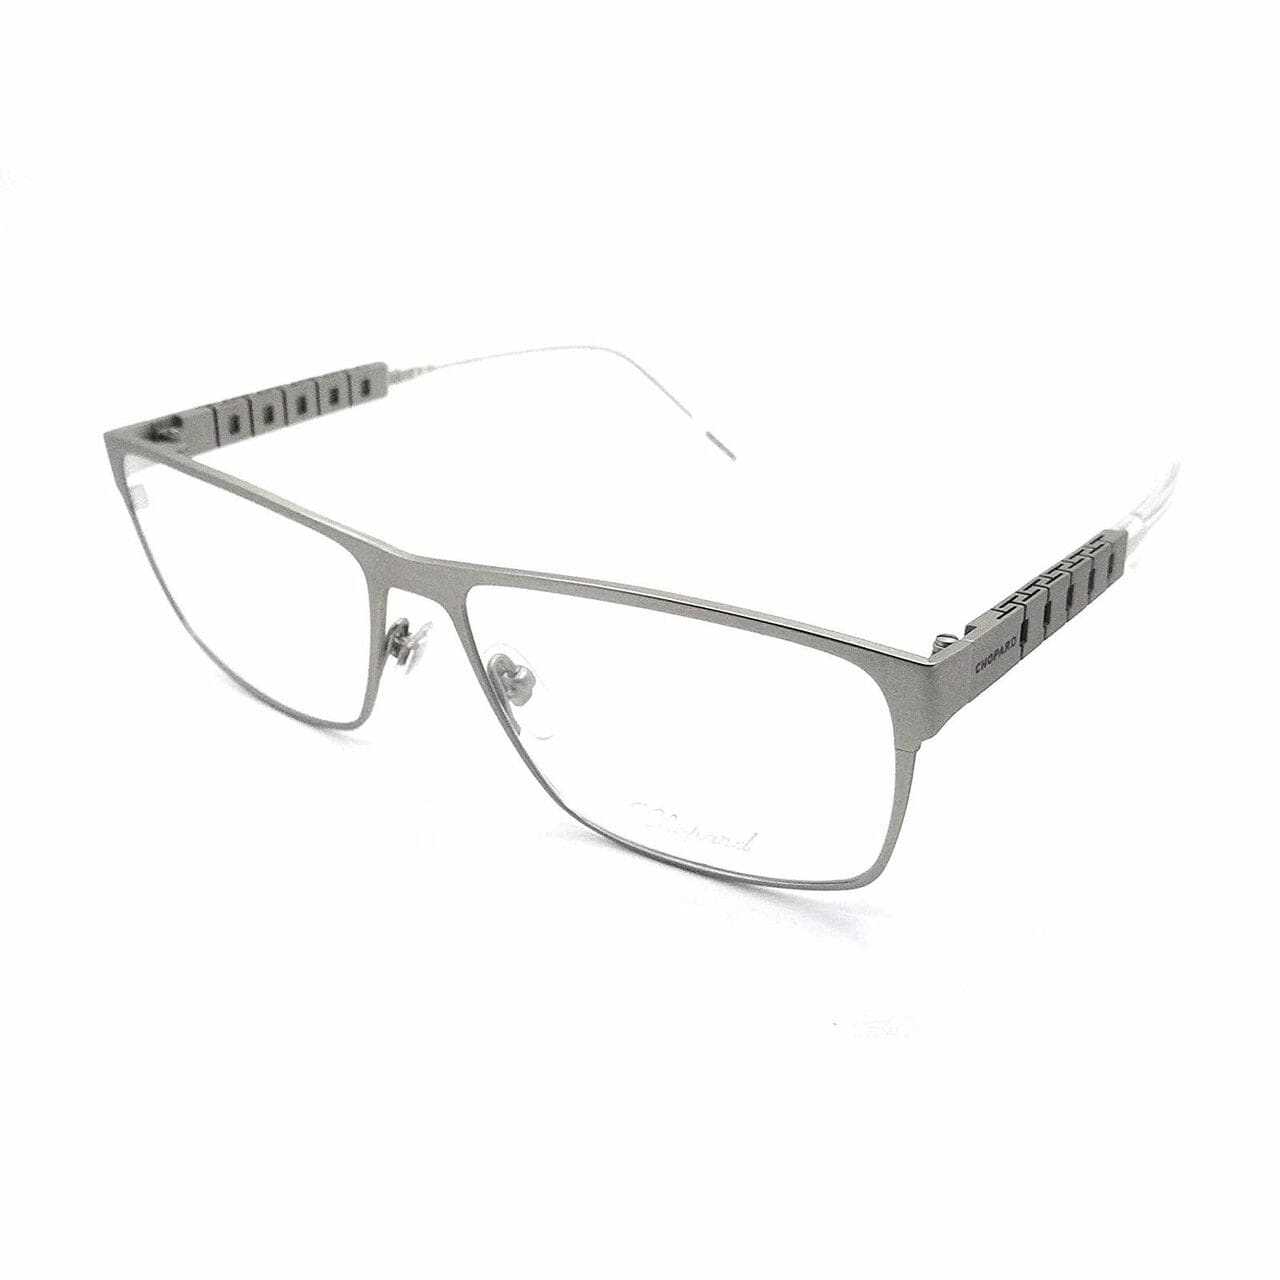 Chopard VCHB03-0581 Satin Silver Rectangular Titanium Unisex Eyeglasses